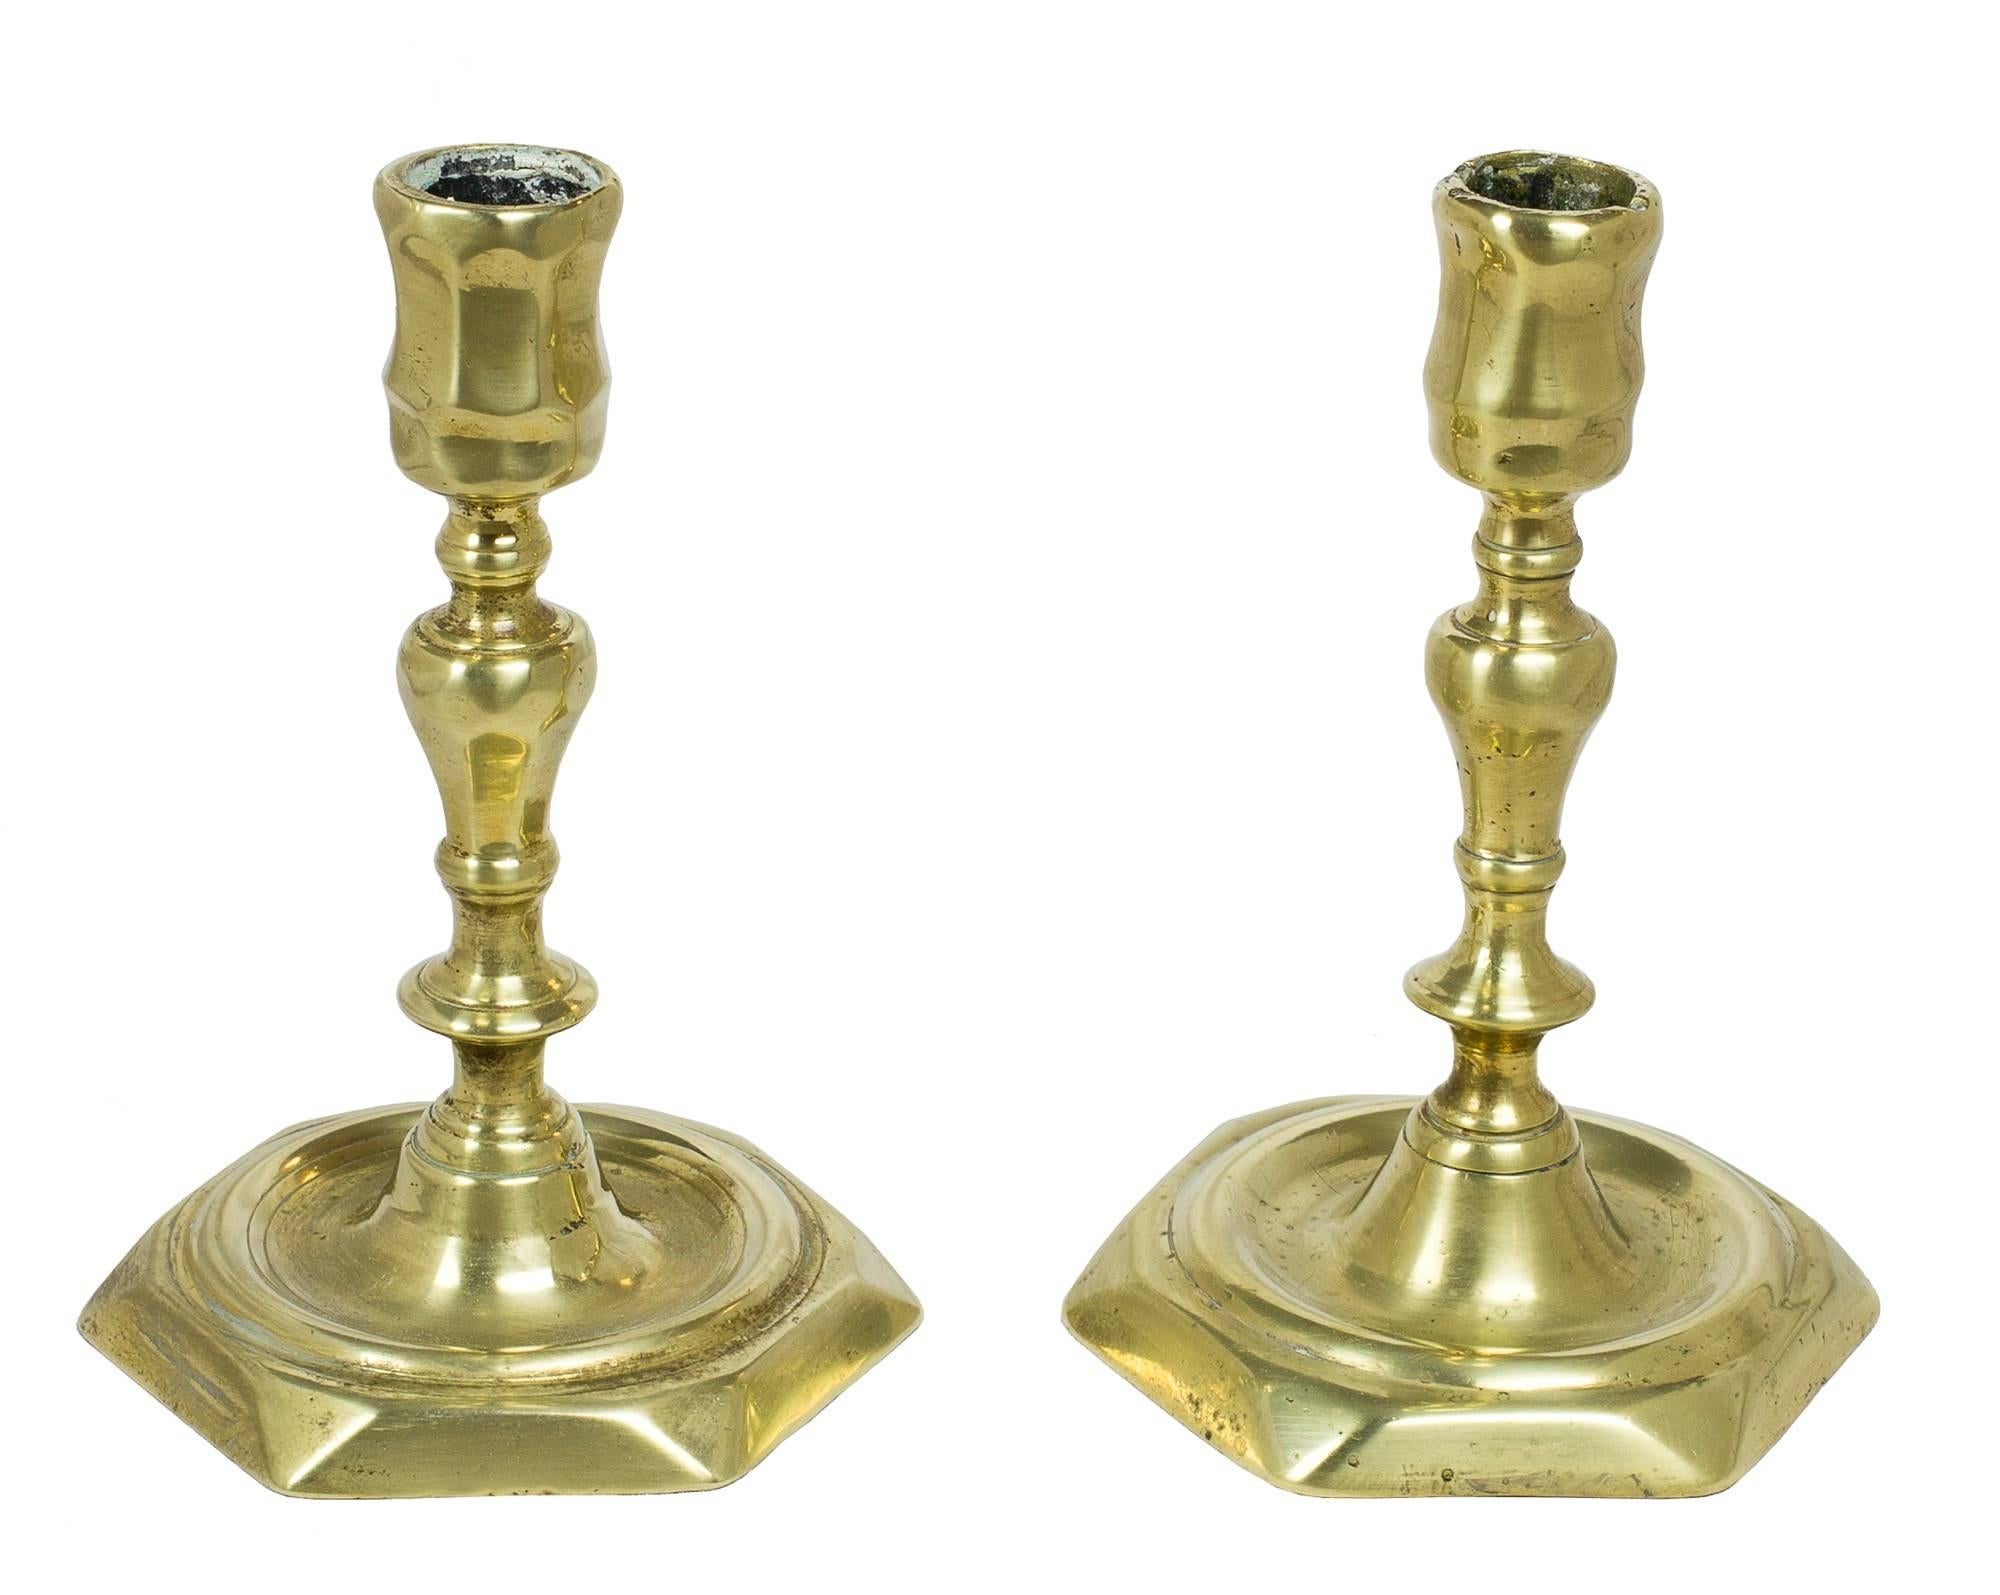 A pair of Northern European brass candlesticks, probably Danish, circa 1740.